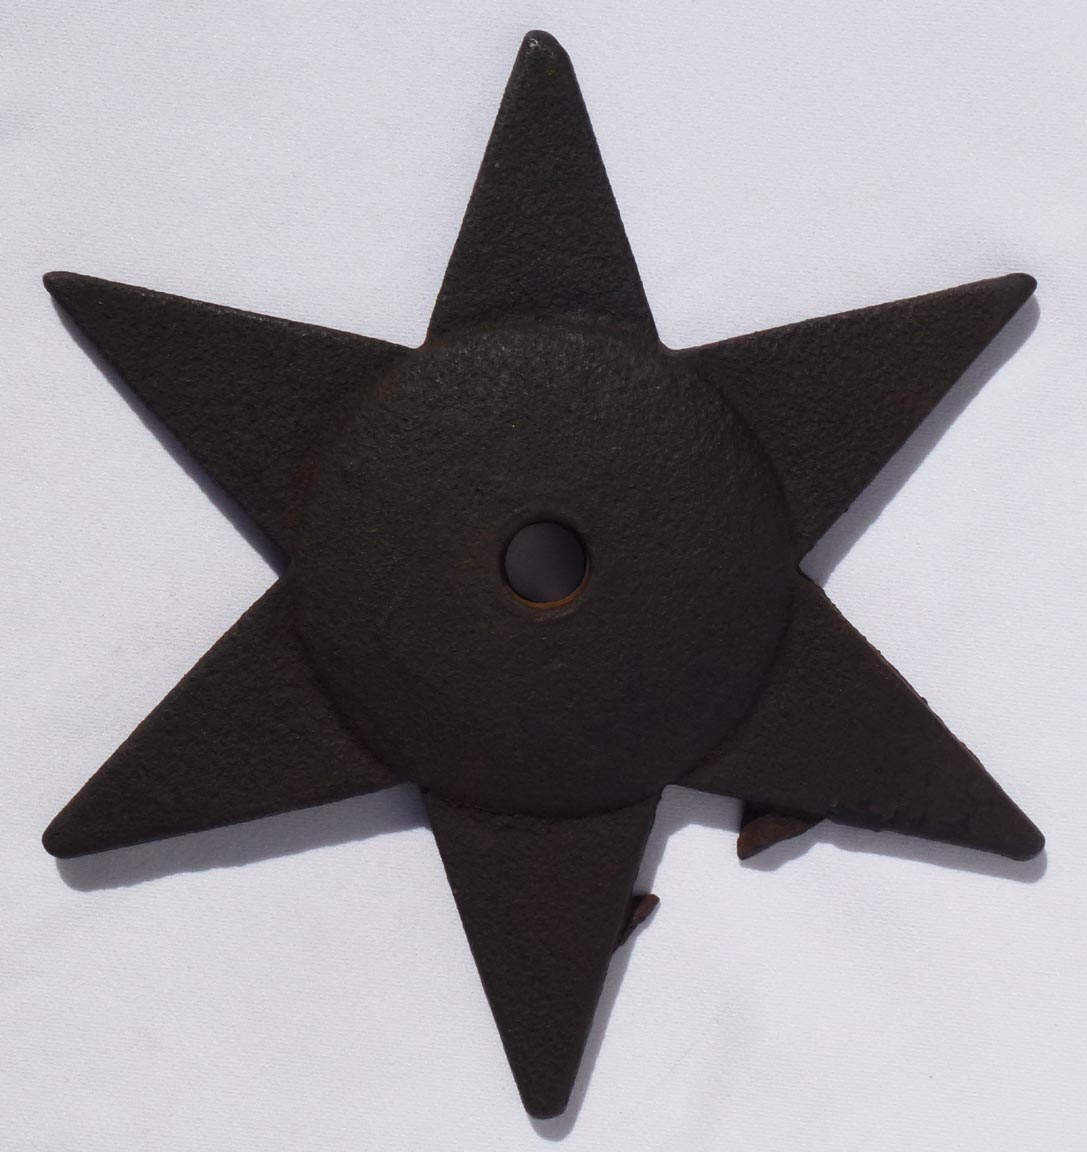 Cast iron architectural star tie-ins